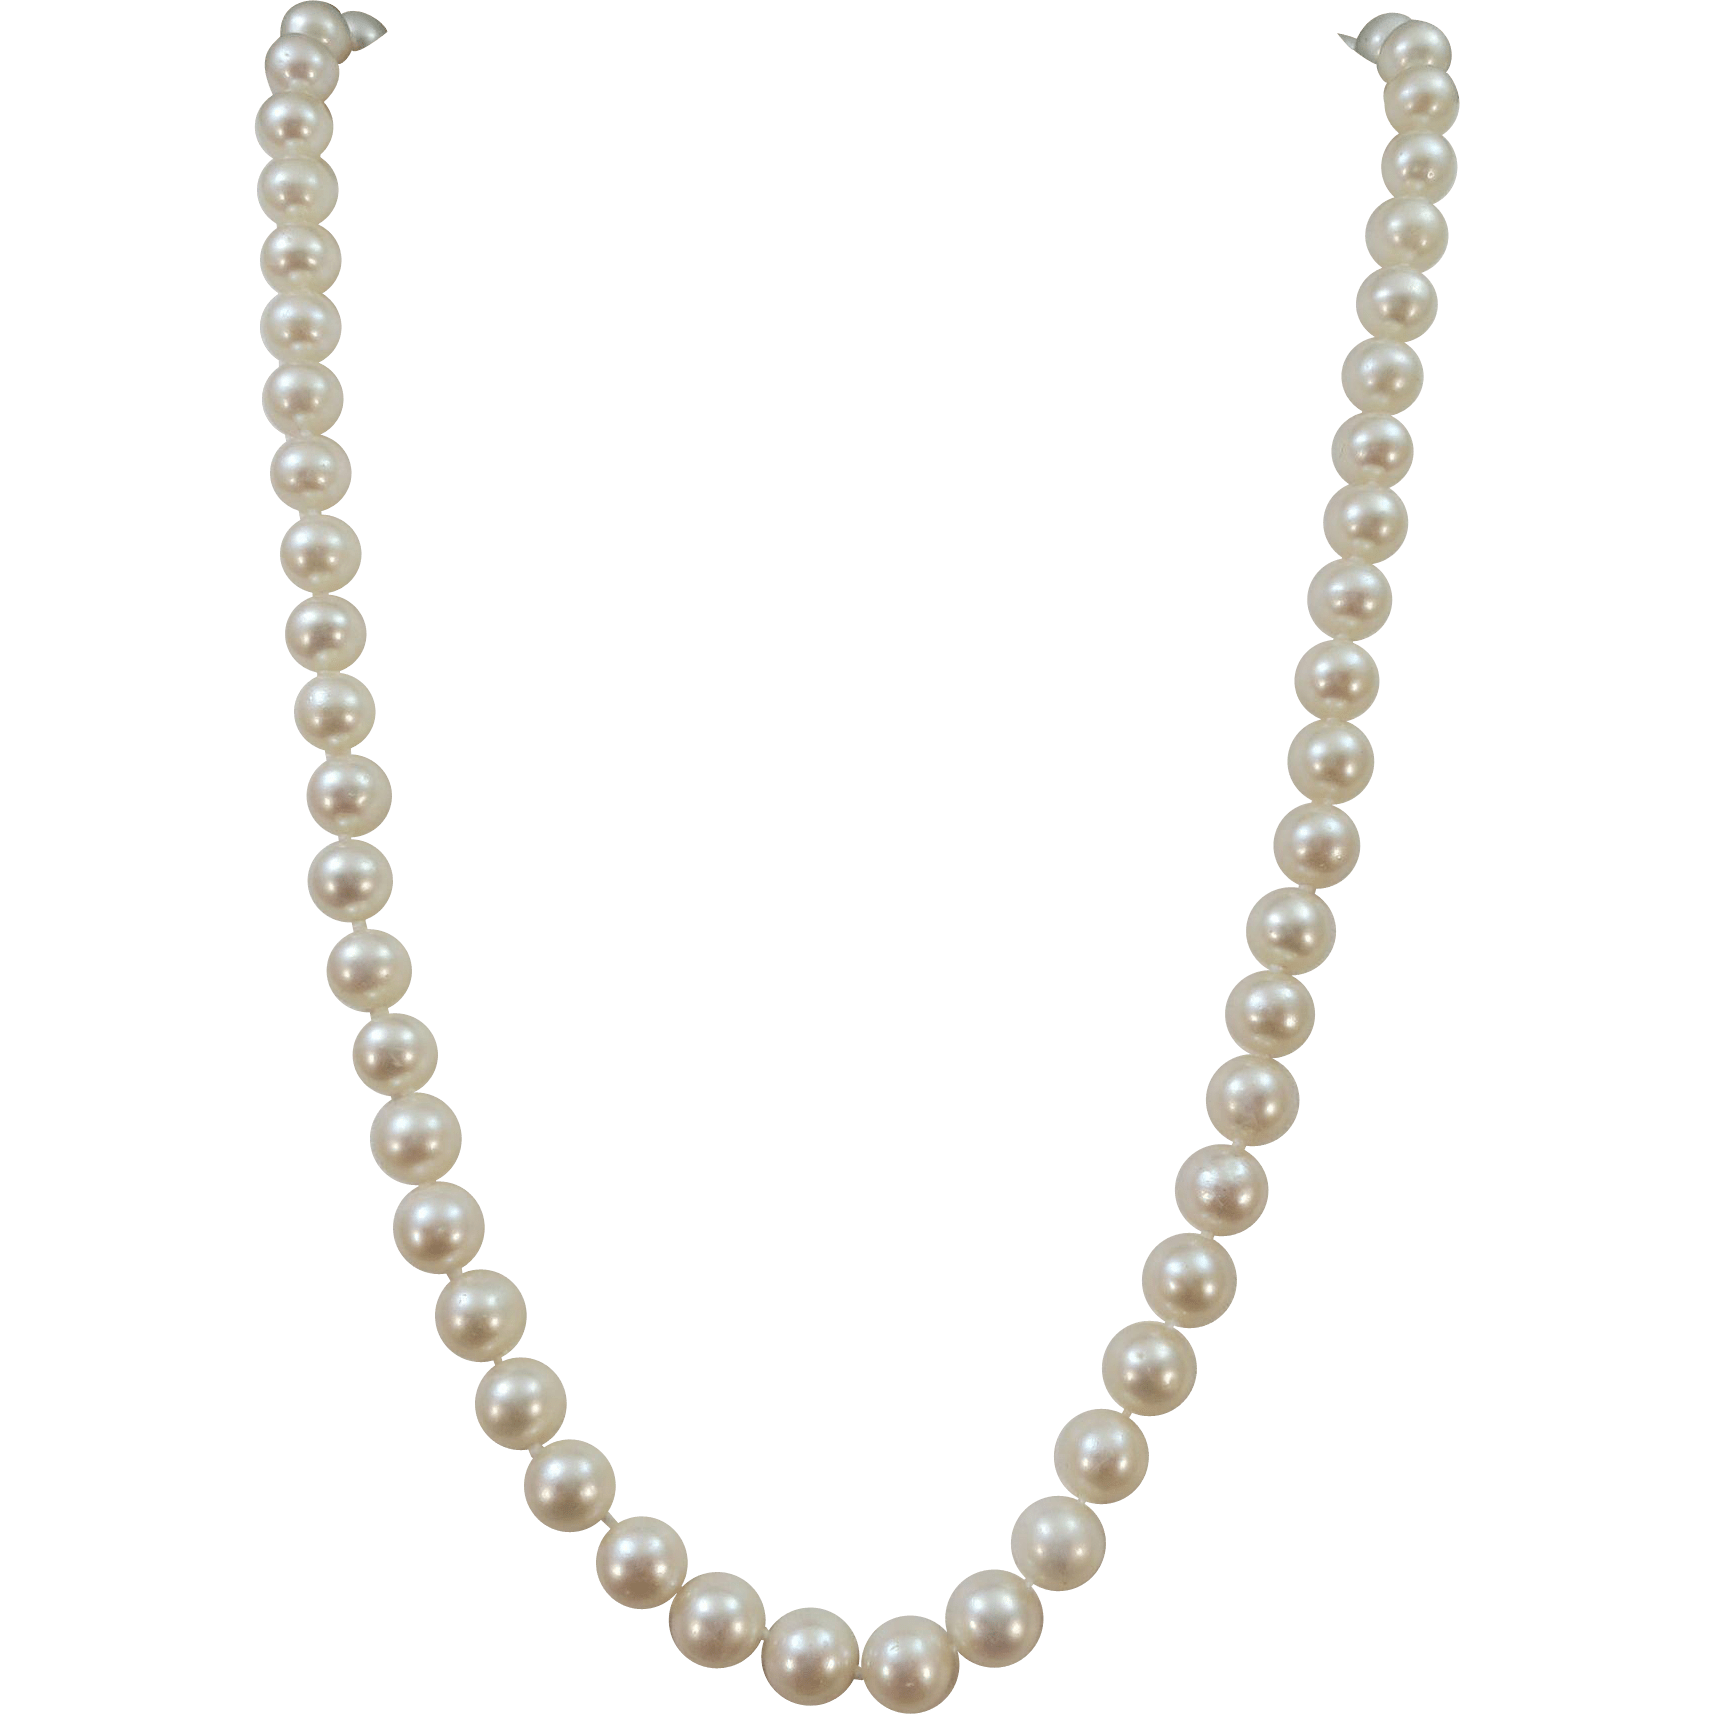 Pearls Transparent Images